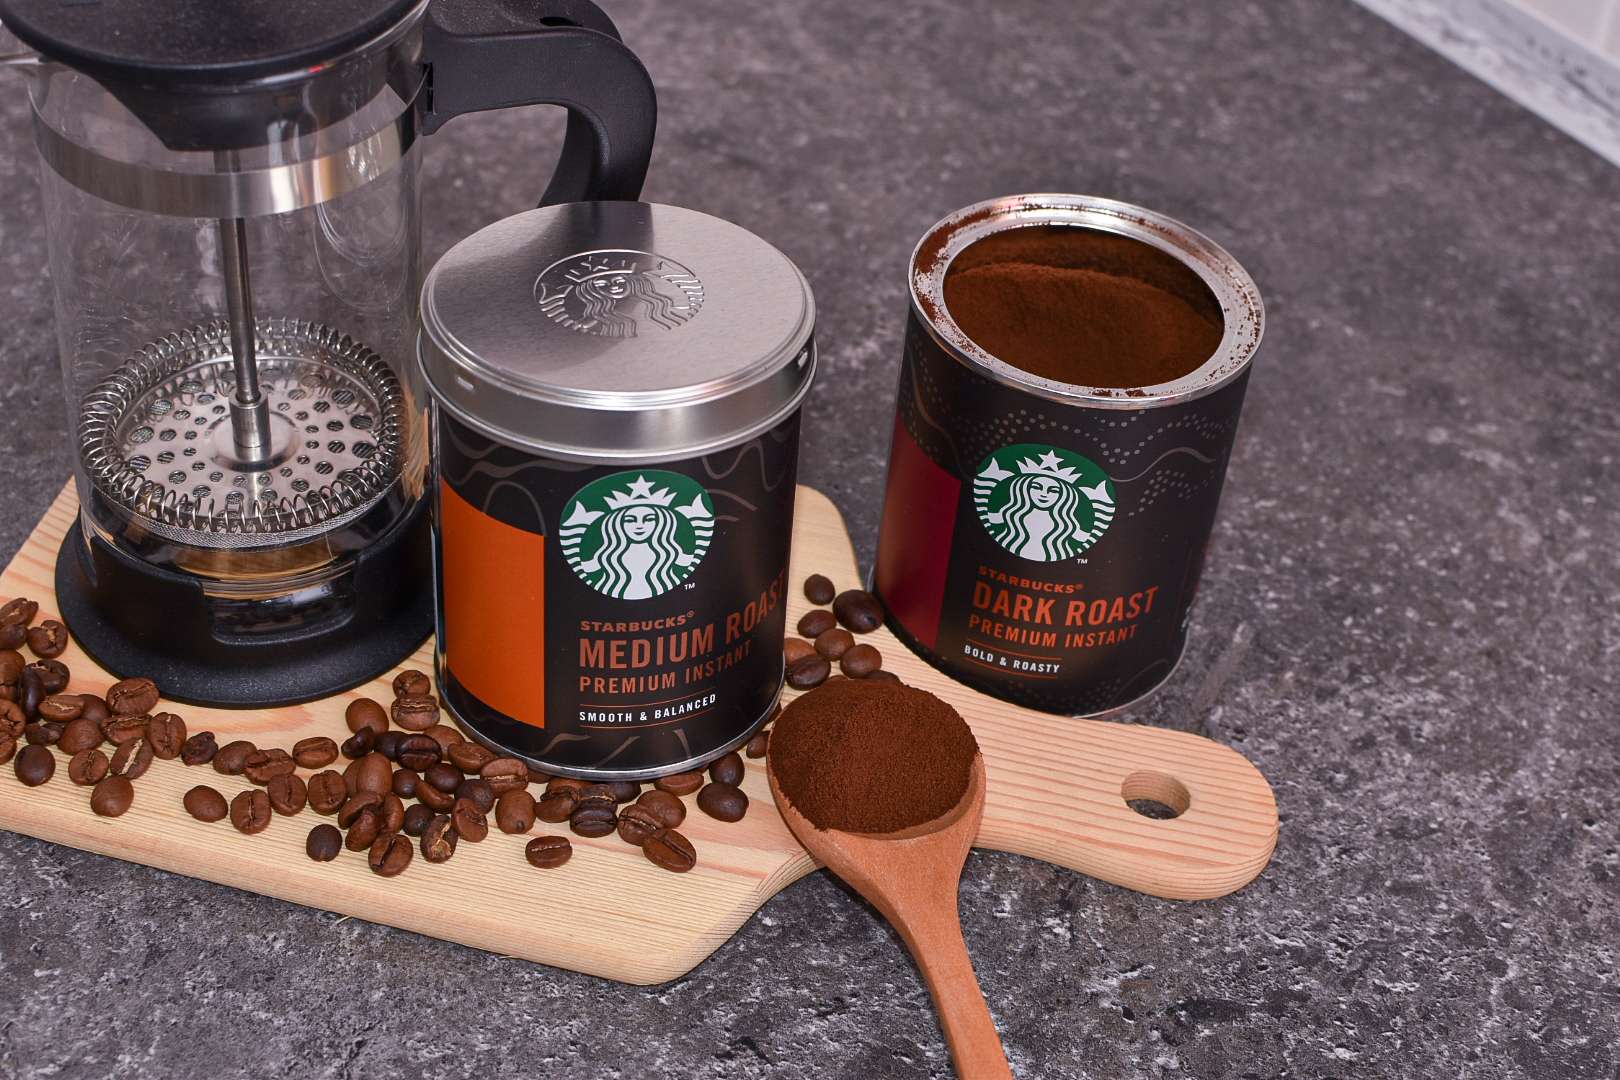 Starbucks Instant Coffee Costco : Starbucks Instant Coffee Costco ...